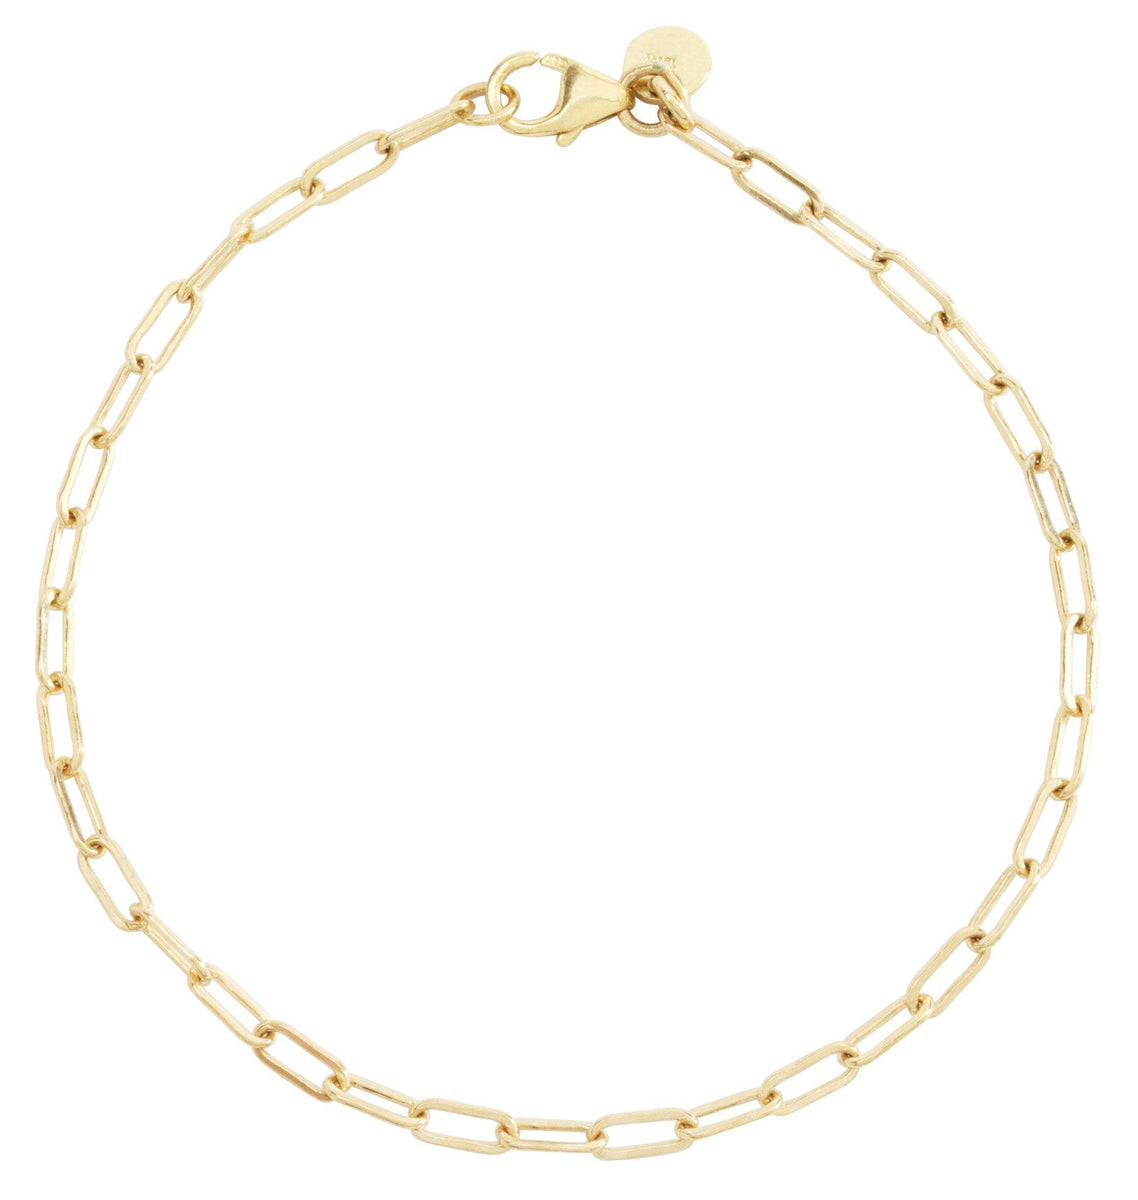 Chain Link Lock Charm Bracelet in Worn Gold. - Lock Charm . (427569)